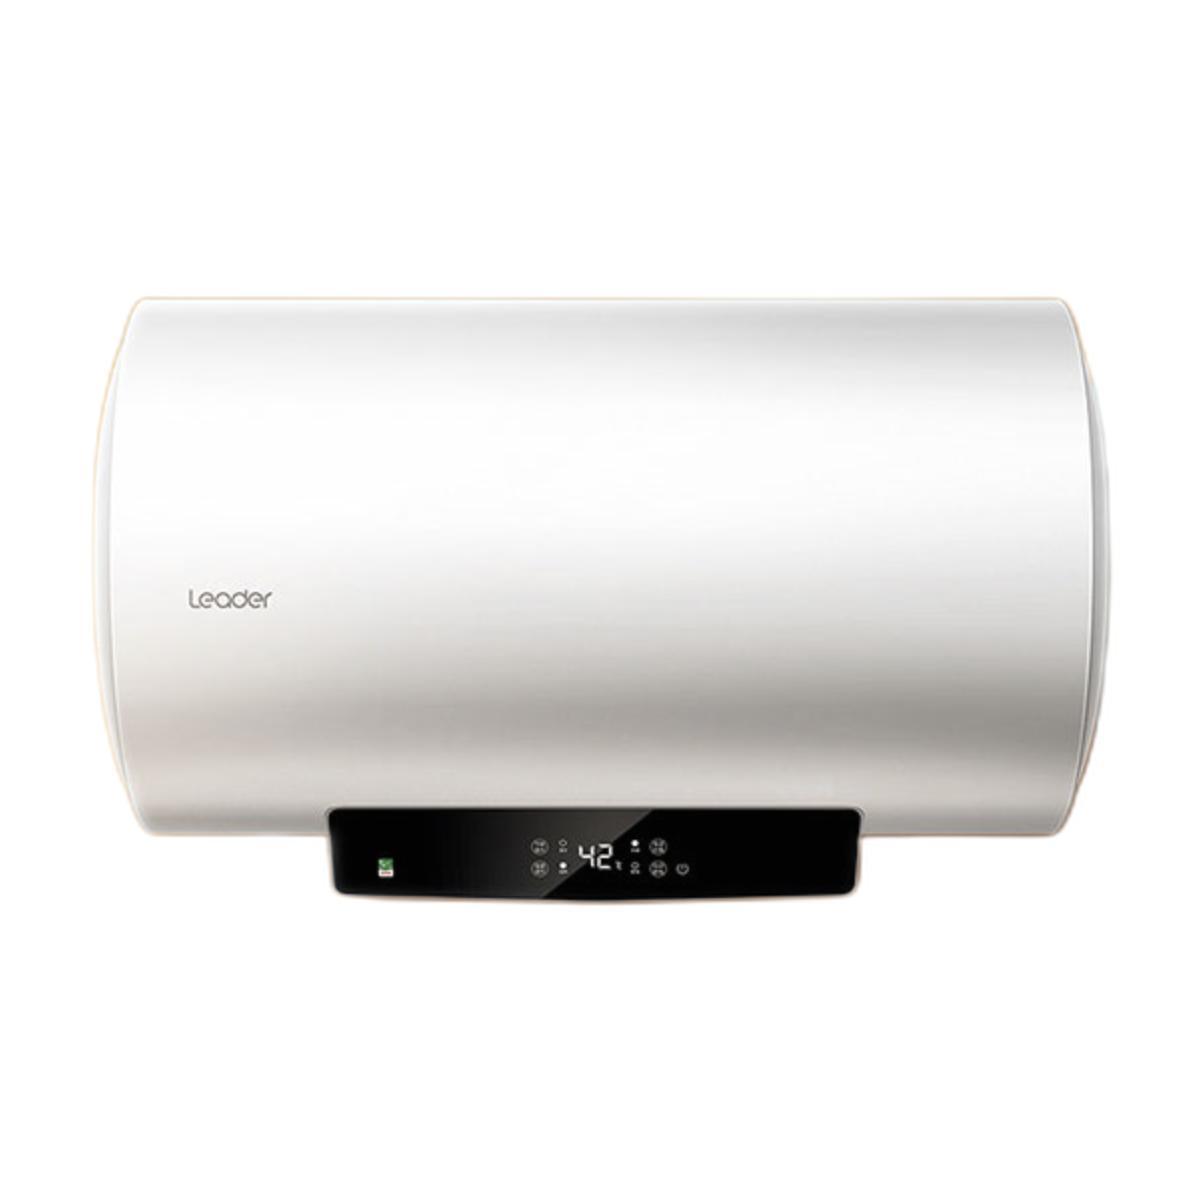 Haier 海尔 LEC6001-LD5 储水式热水器 60L 白色 2200W 券后649元